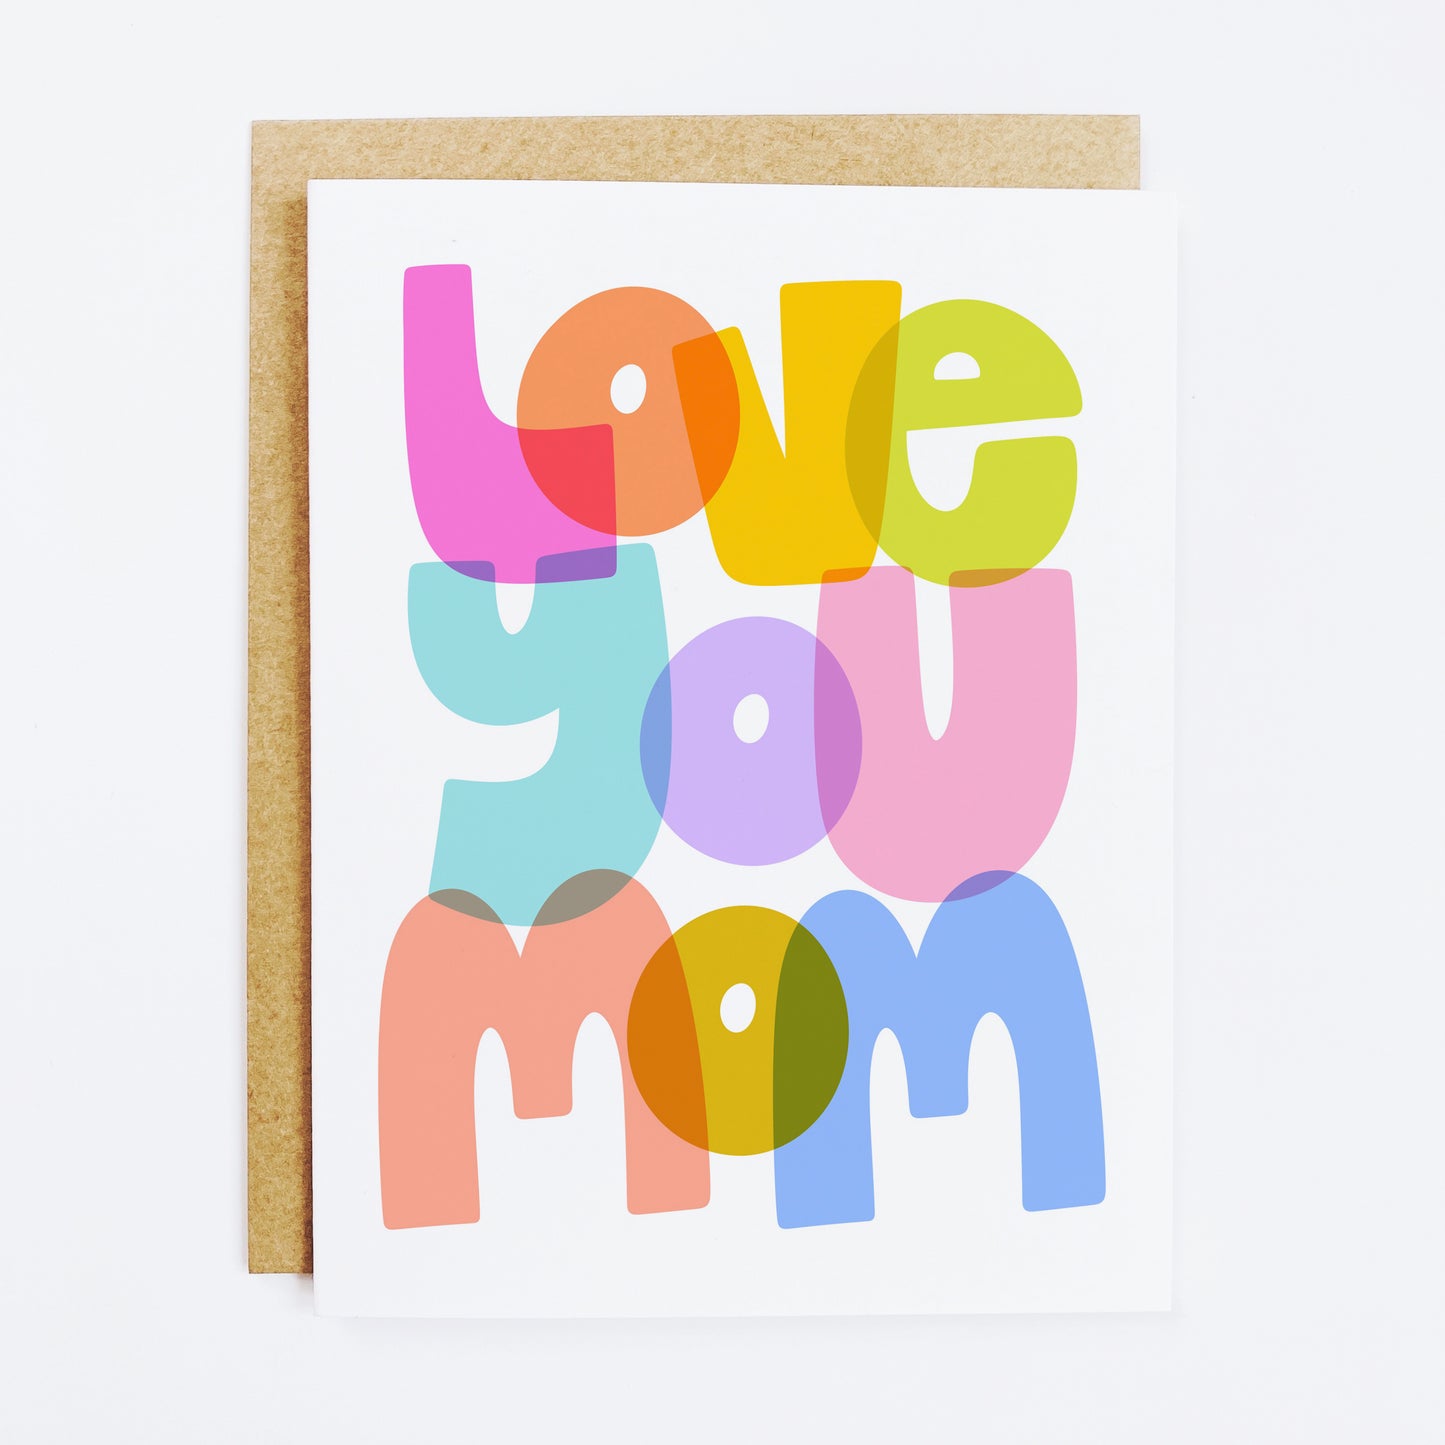 Love You Mom Card